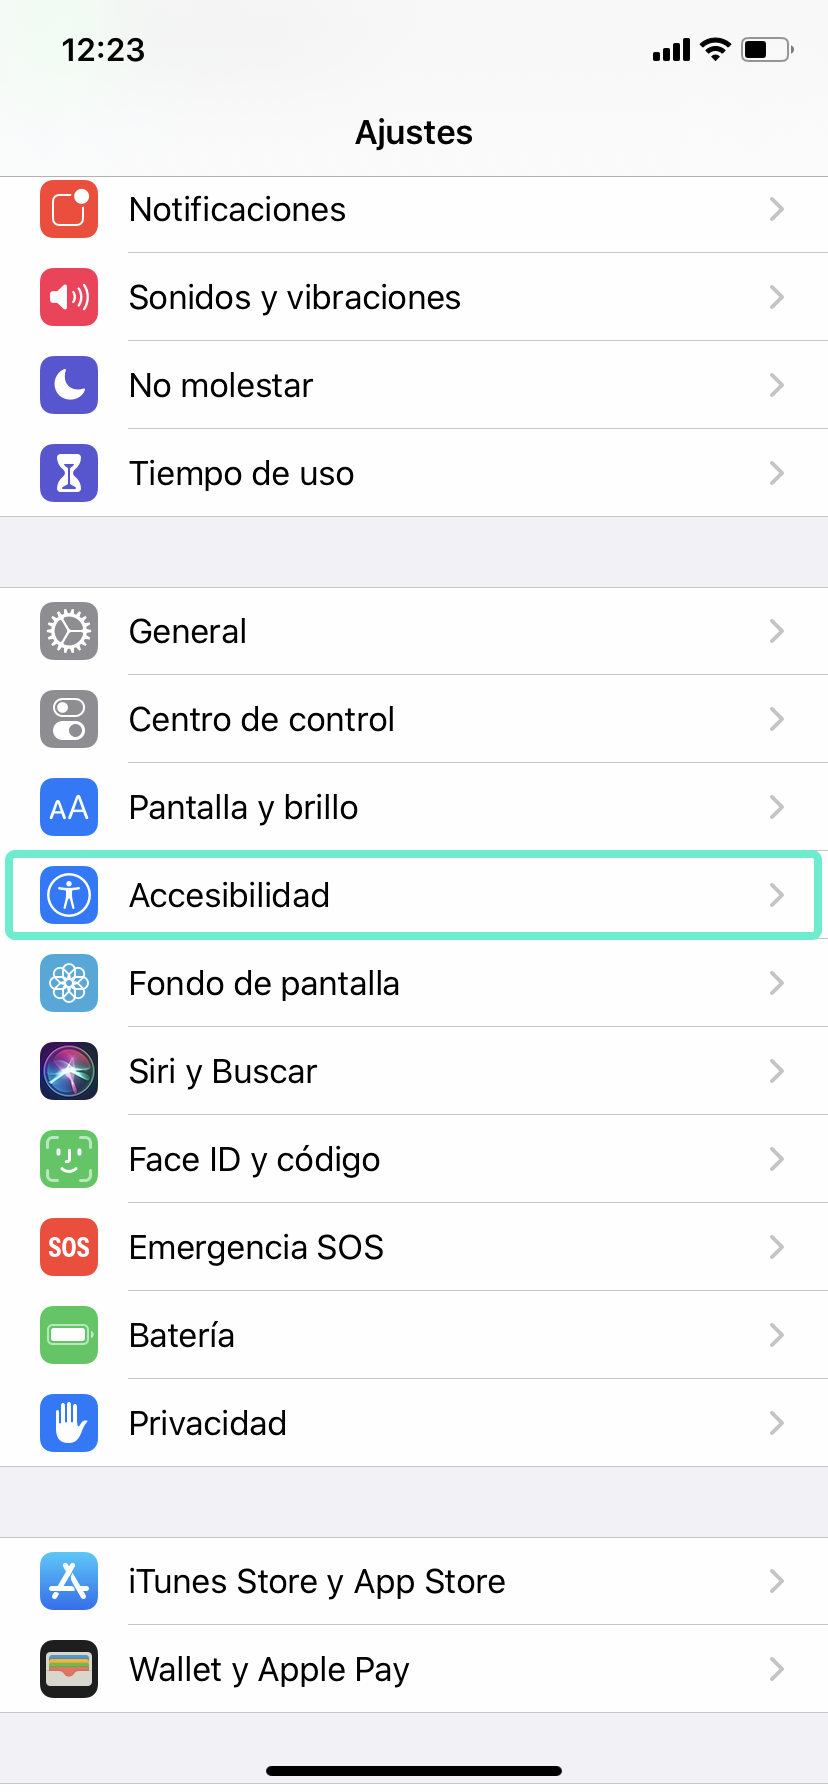 Acceder Accesibilidad apple iphone rim mobile